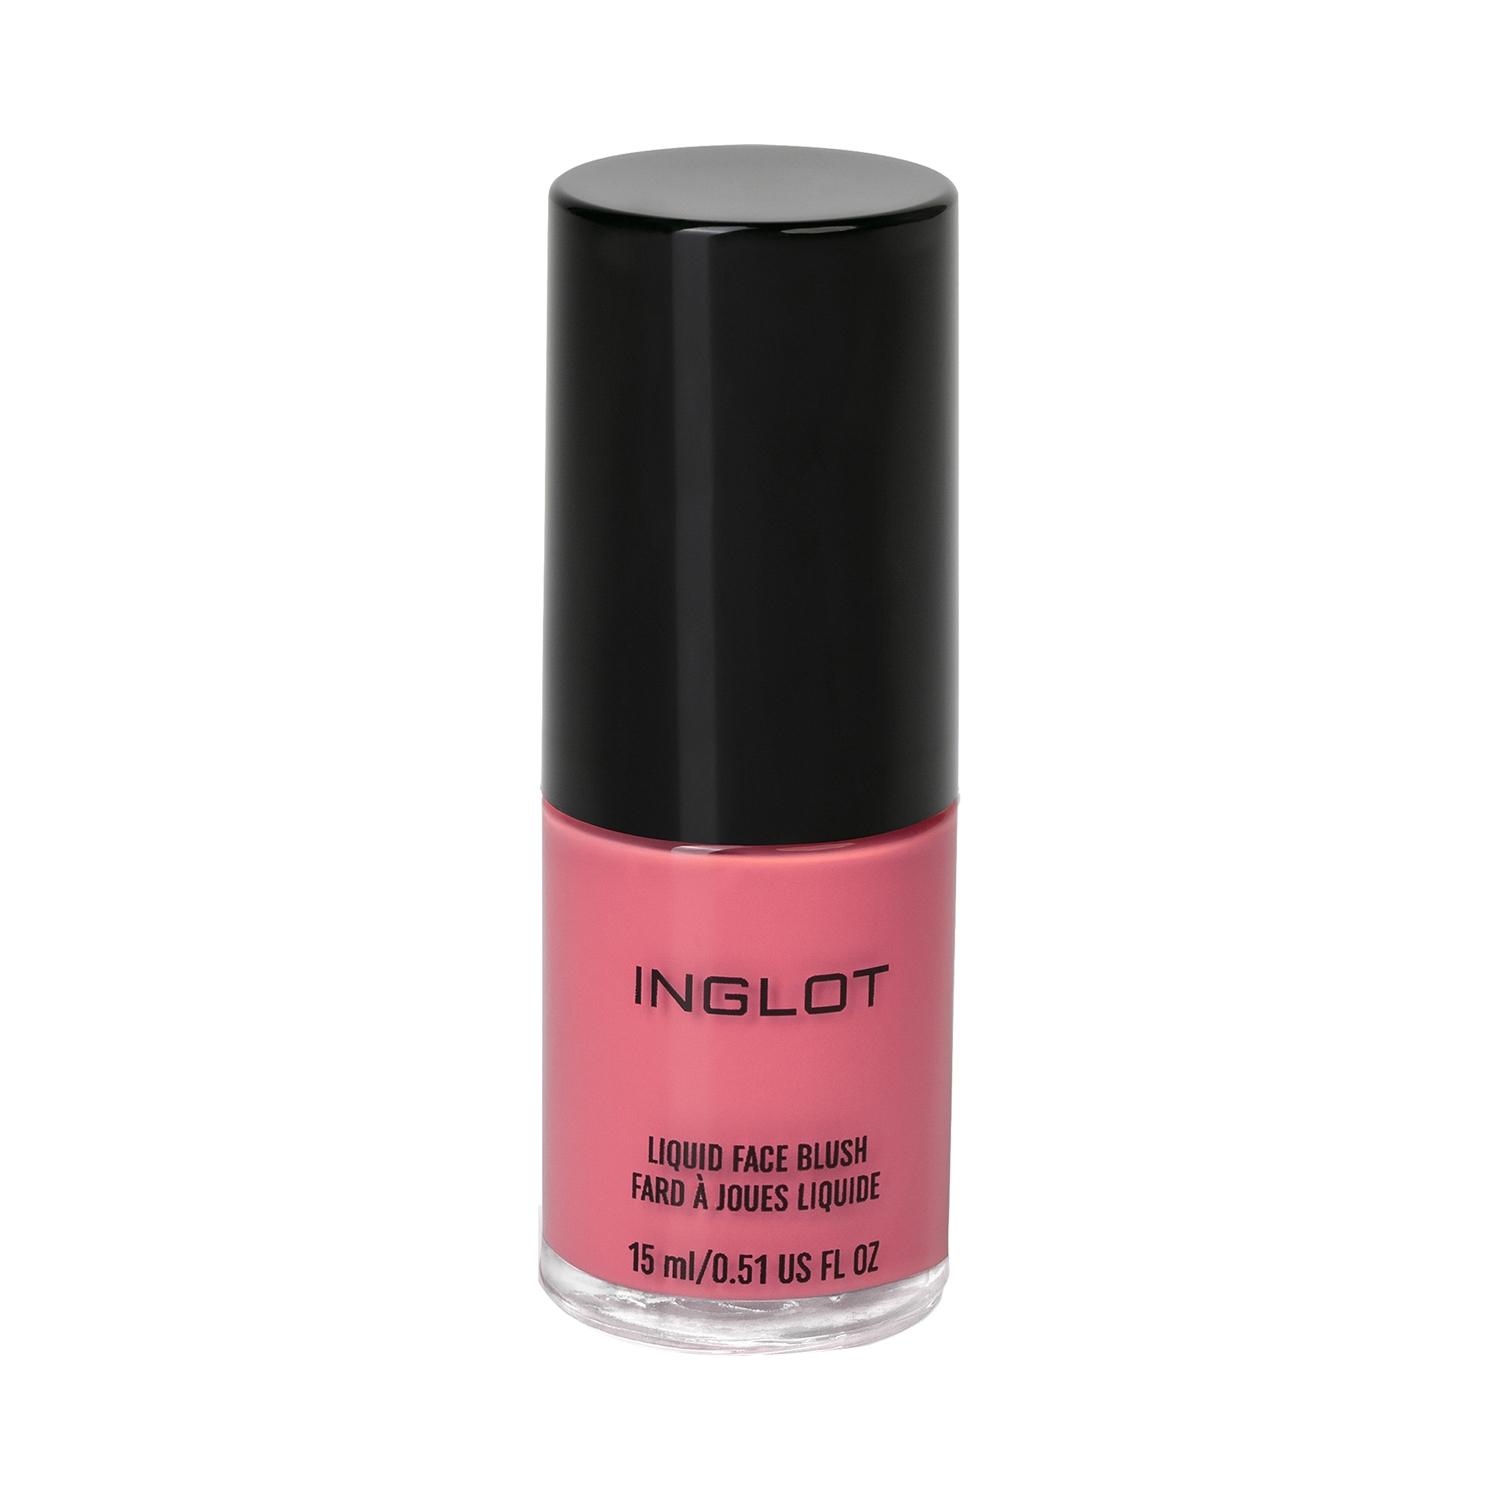 inglot liquid face blush - 92 shade (15ml)